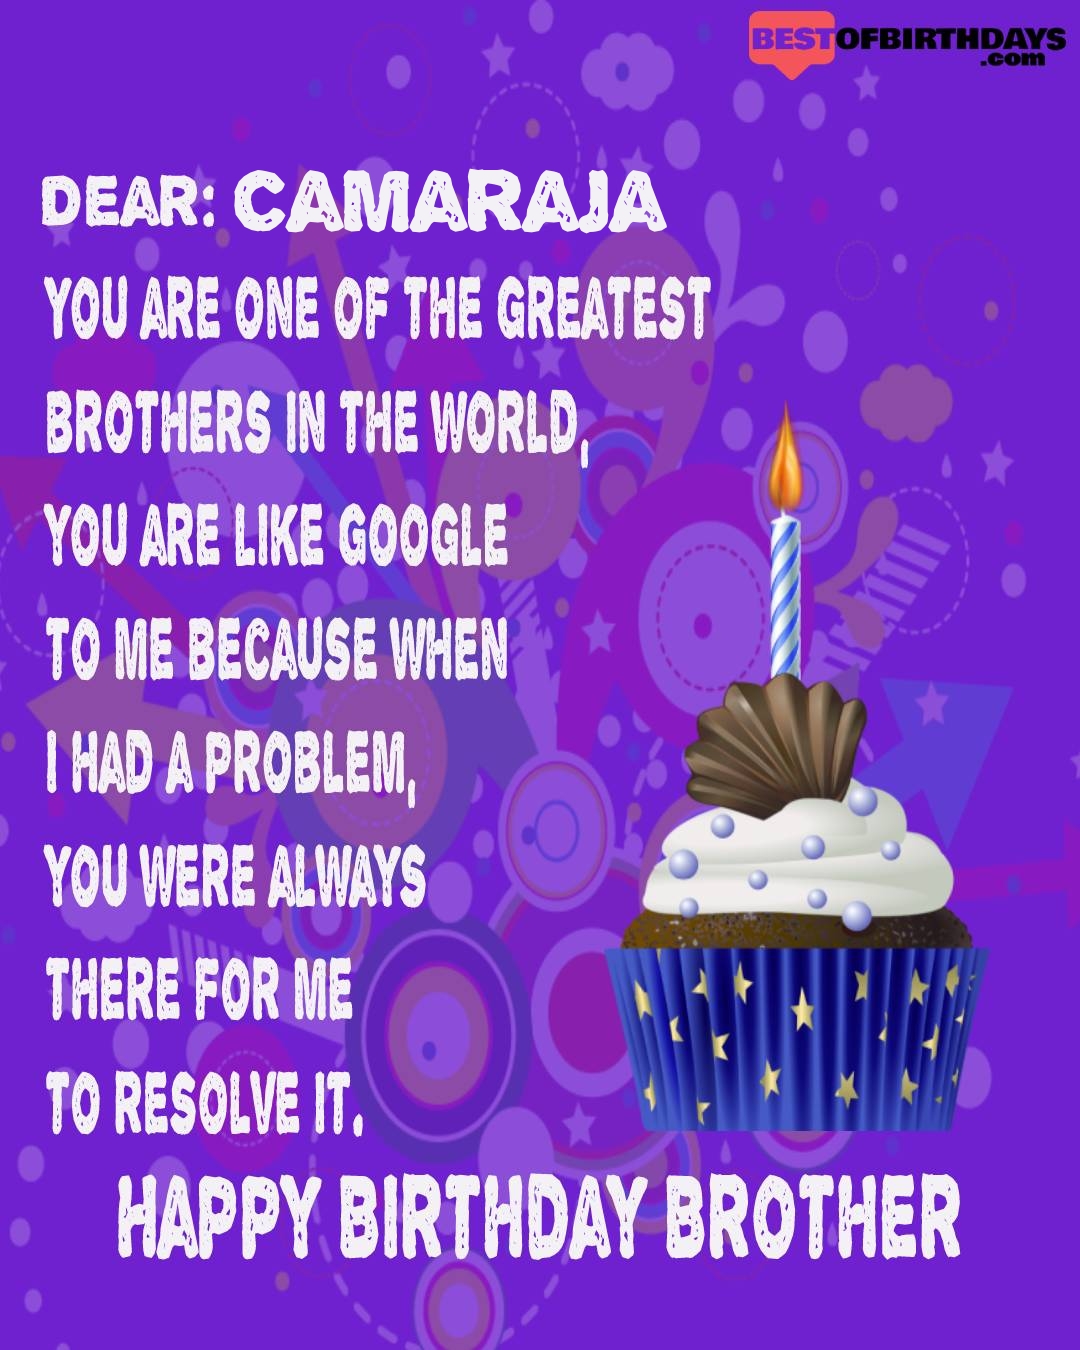 Happy birthday camaraja bhai brother bro